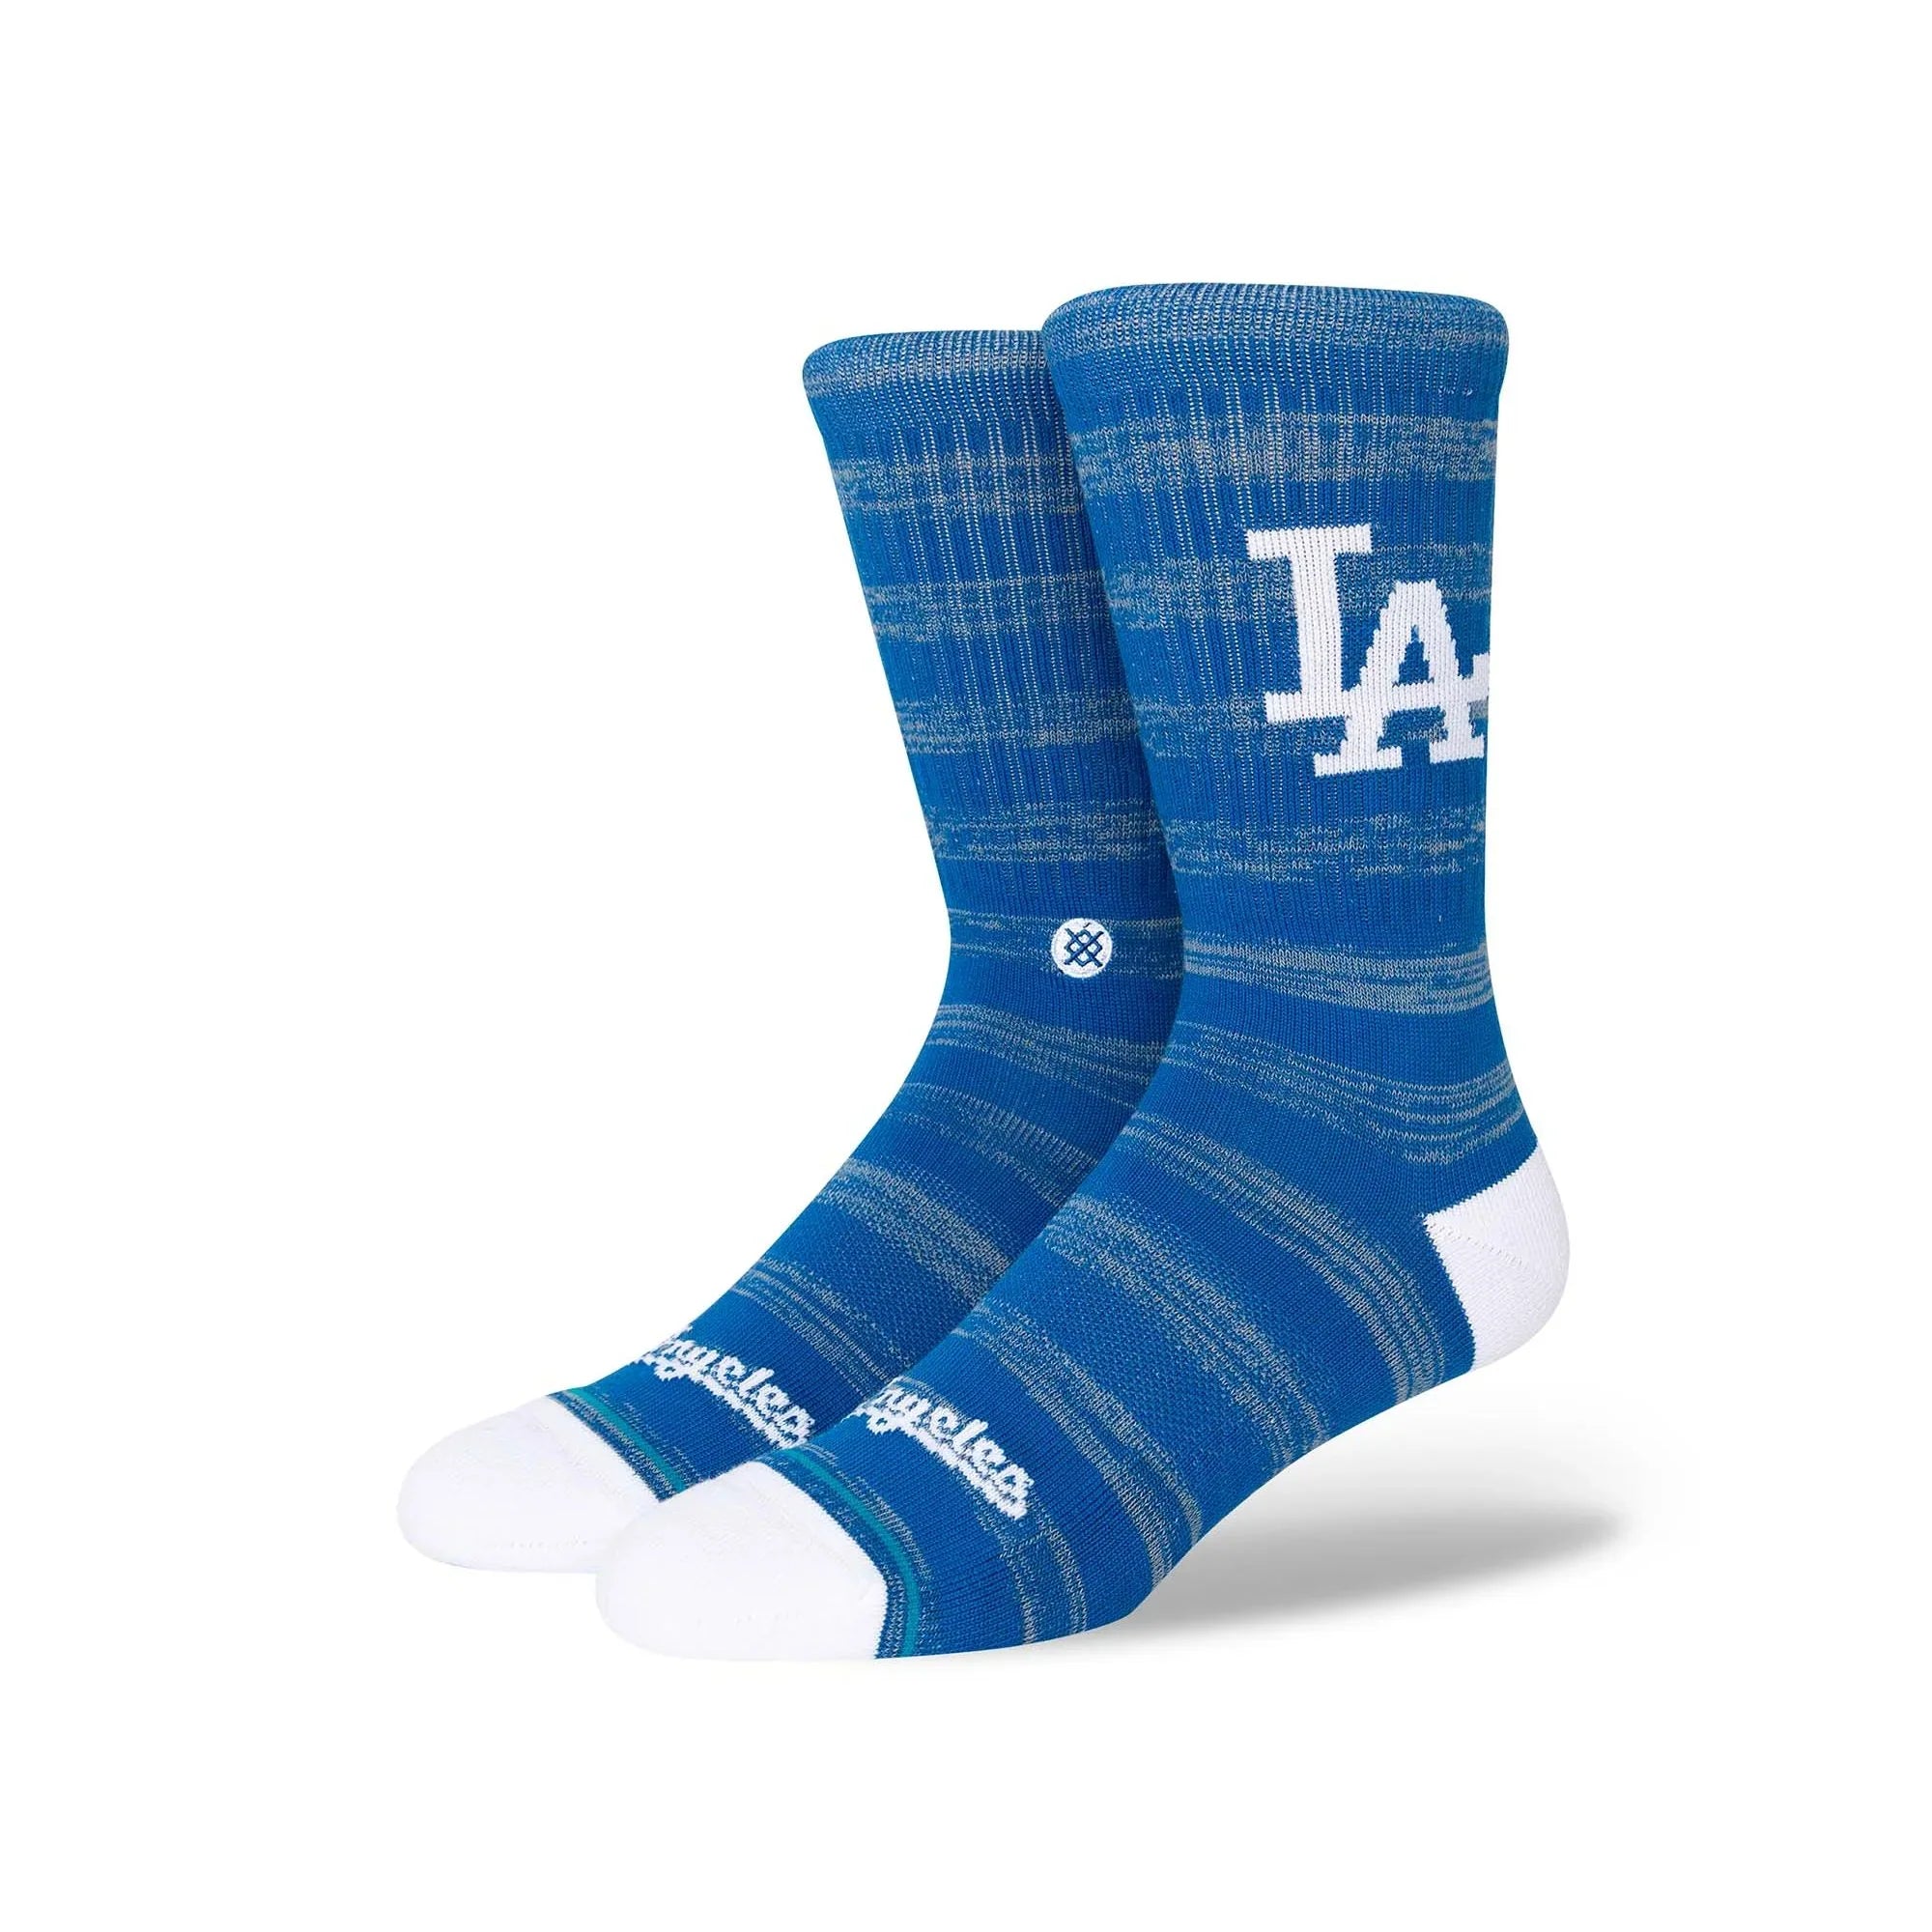 'Stance Los Angeles Dodgers Twist Crew Socks' in 'Blue' colour